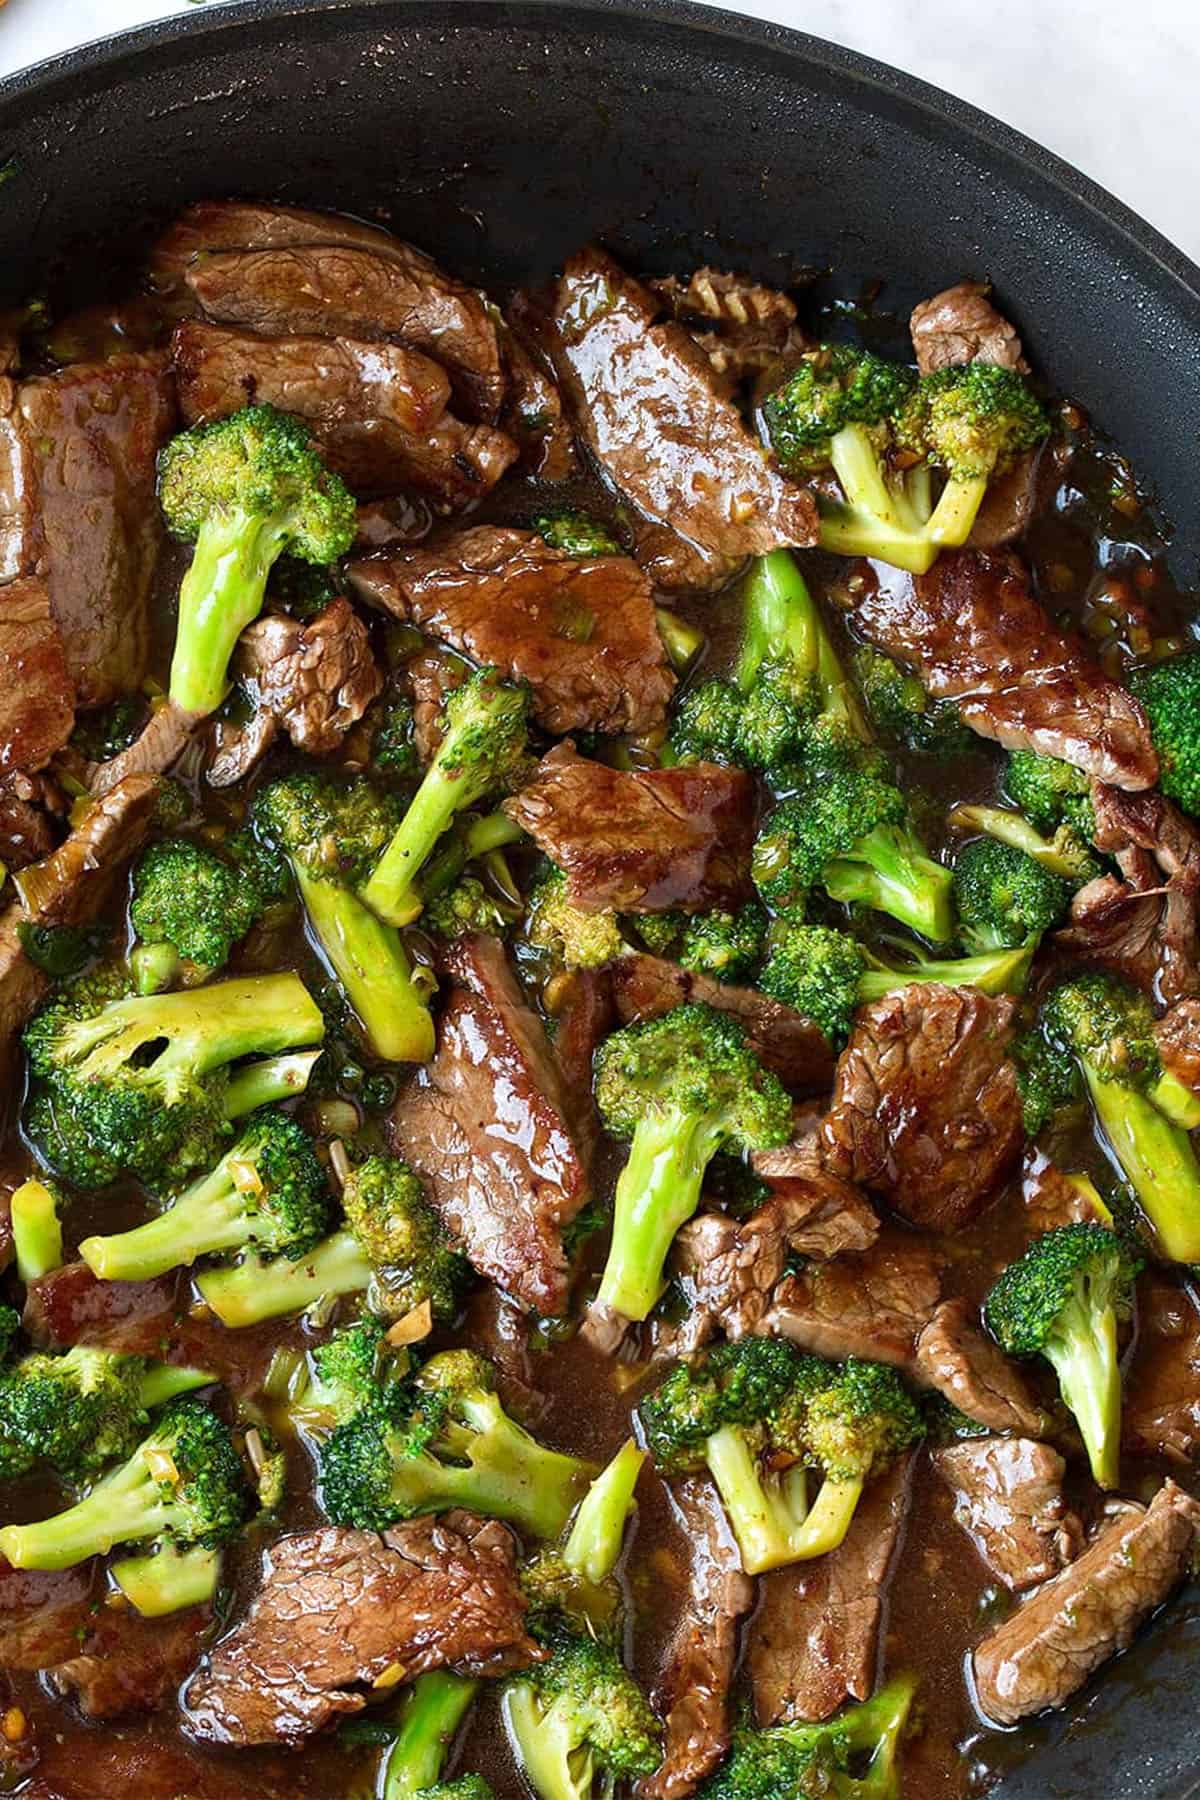 Beef and Broccoli Stir Fry - Erren's Kitchen